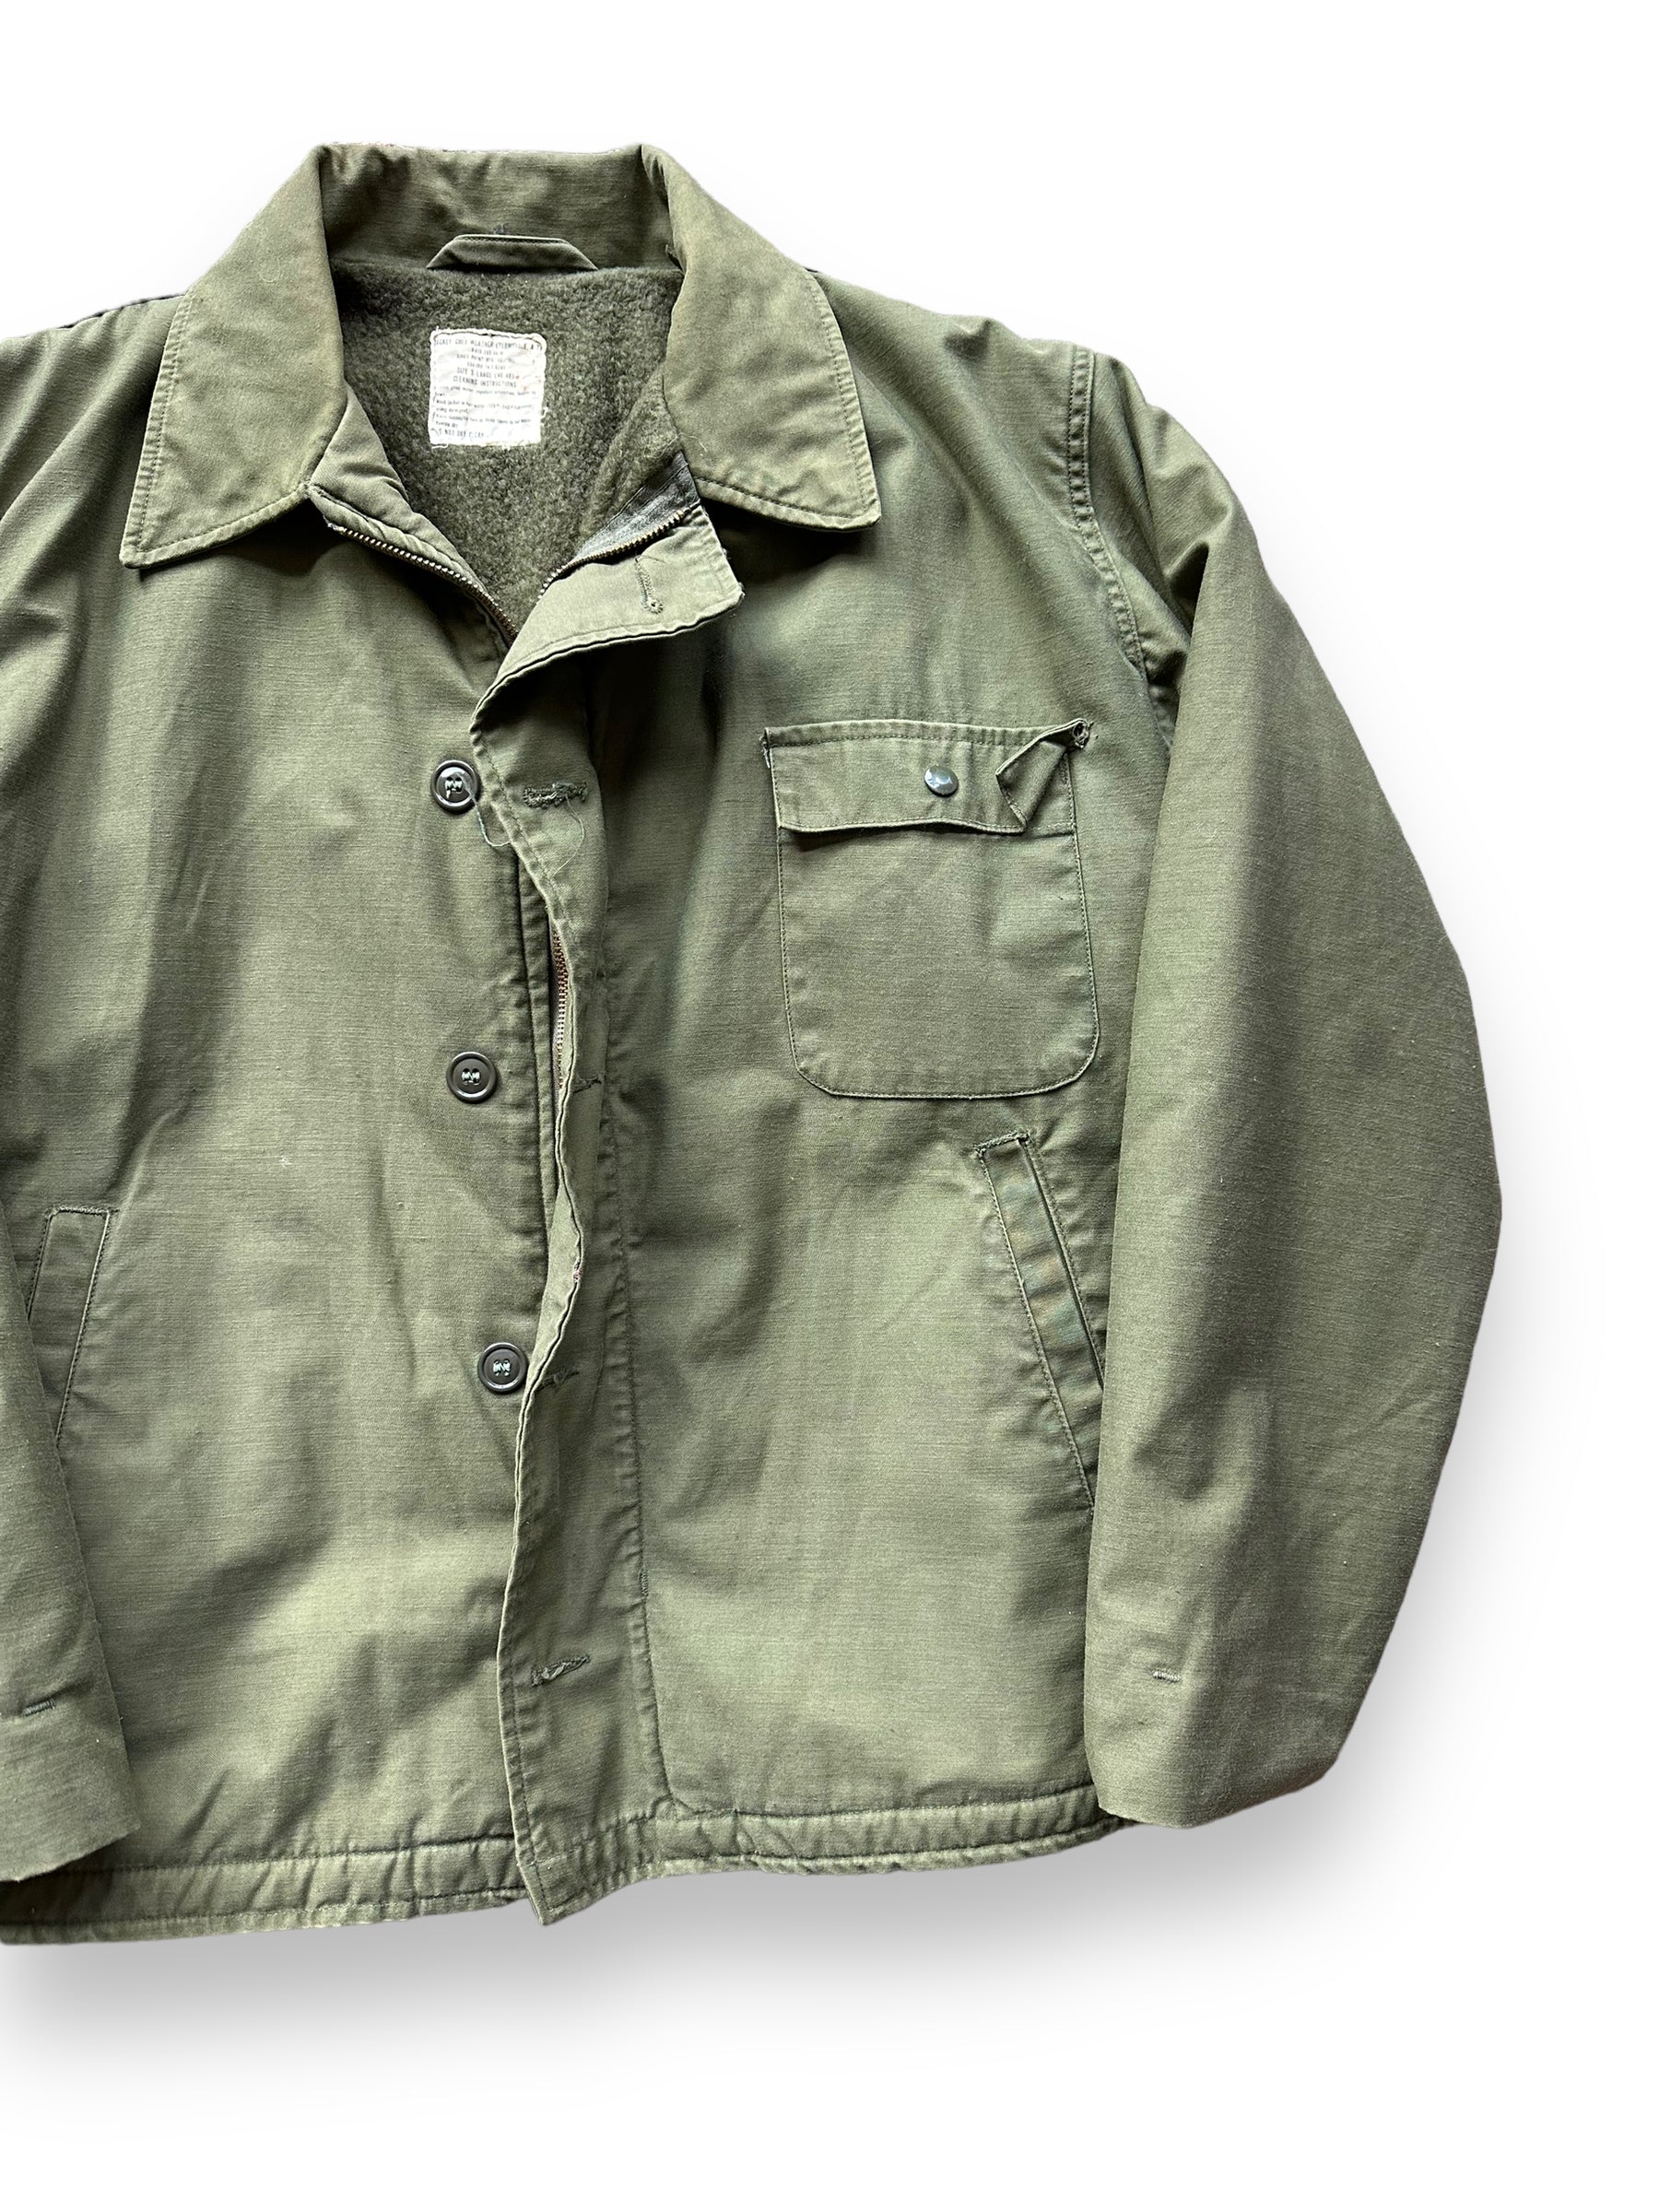 Vintage Viet Nam Era Cold Weather A-2 Jacket SZ XL | Vintage Military  Jackets Seattle | Barn Owl Vintage Clothing Seattle